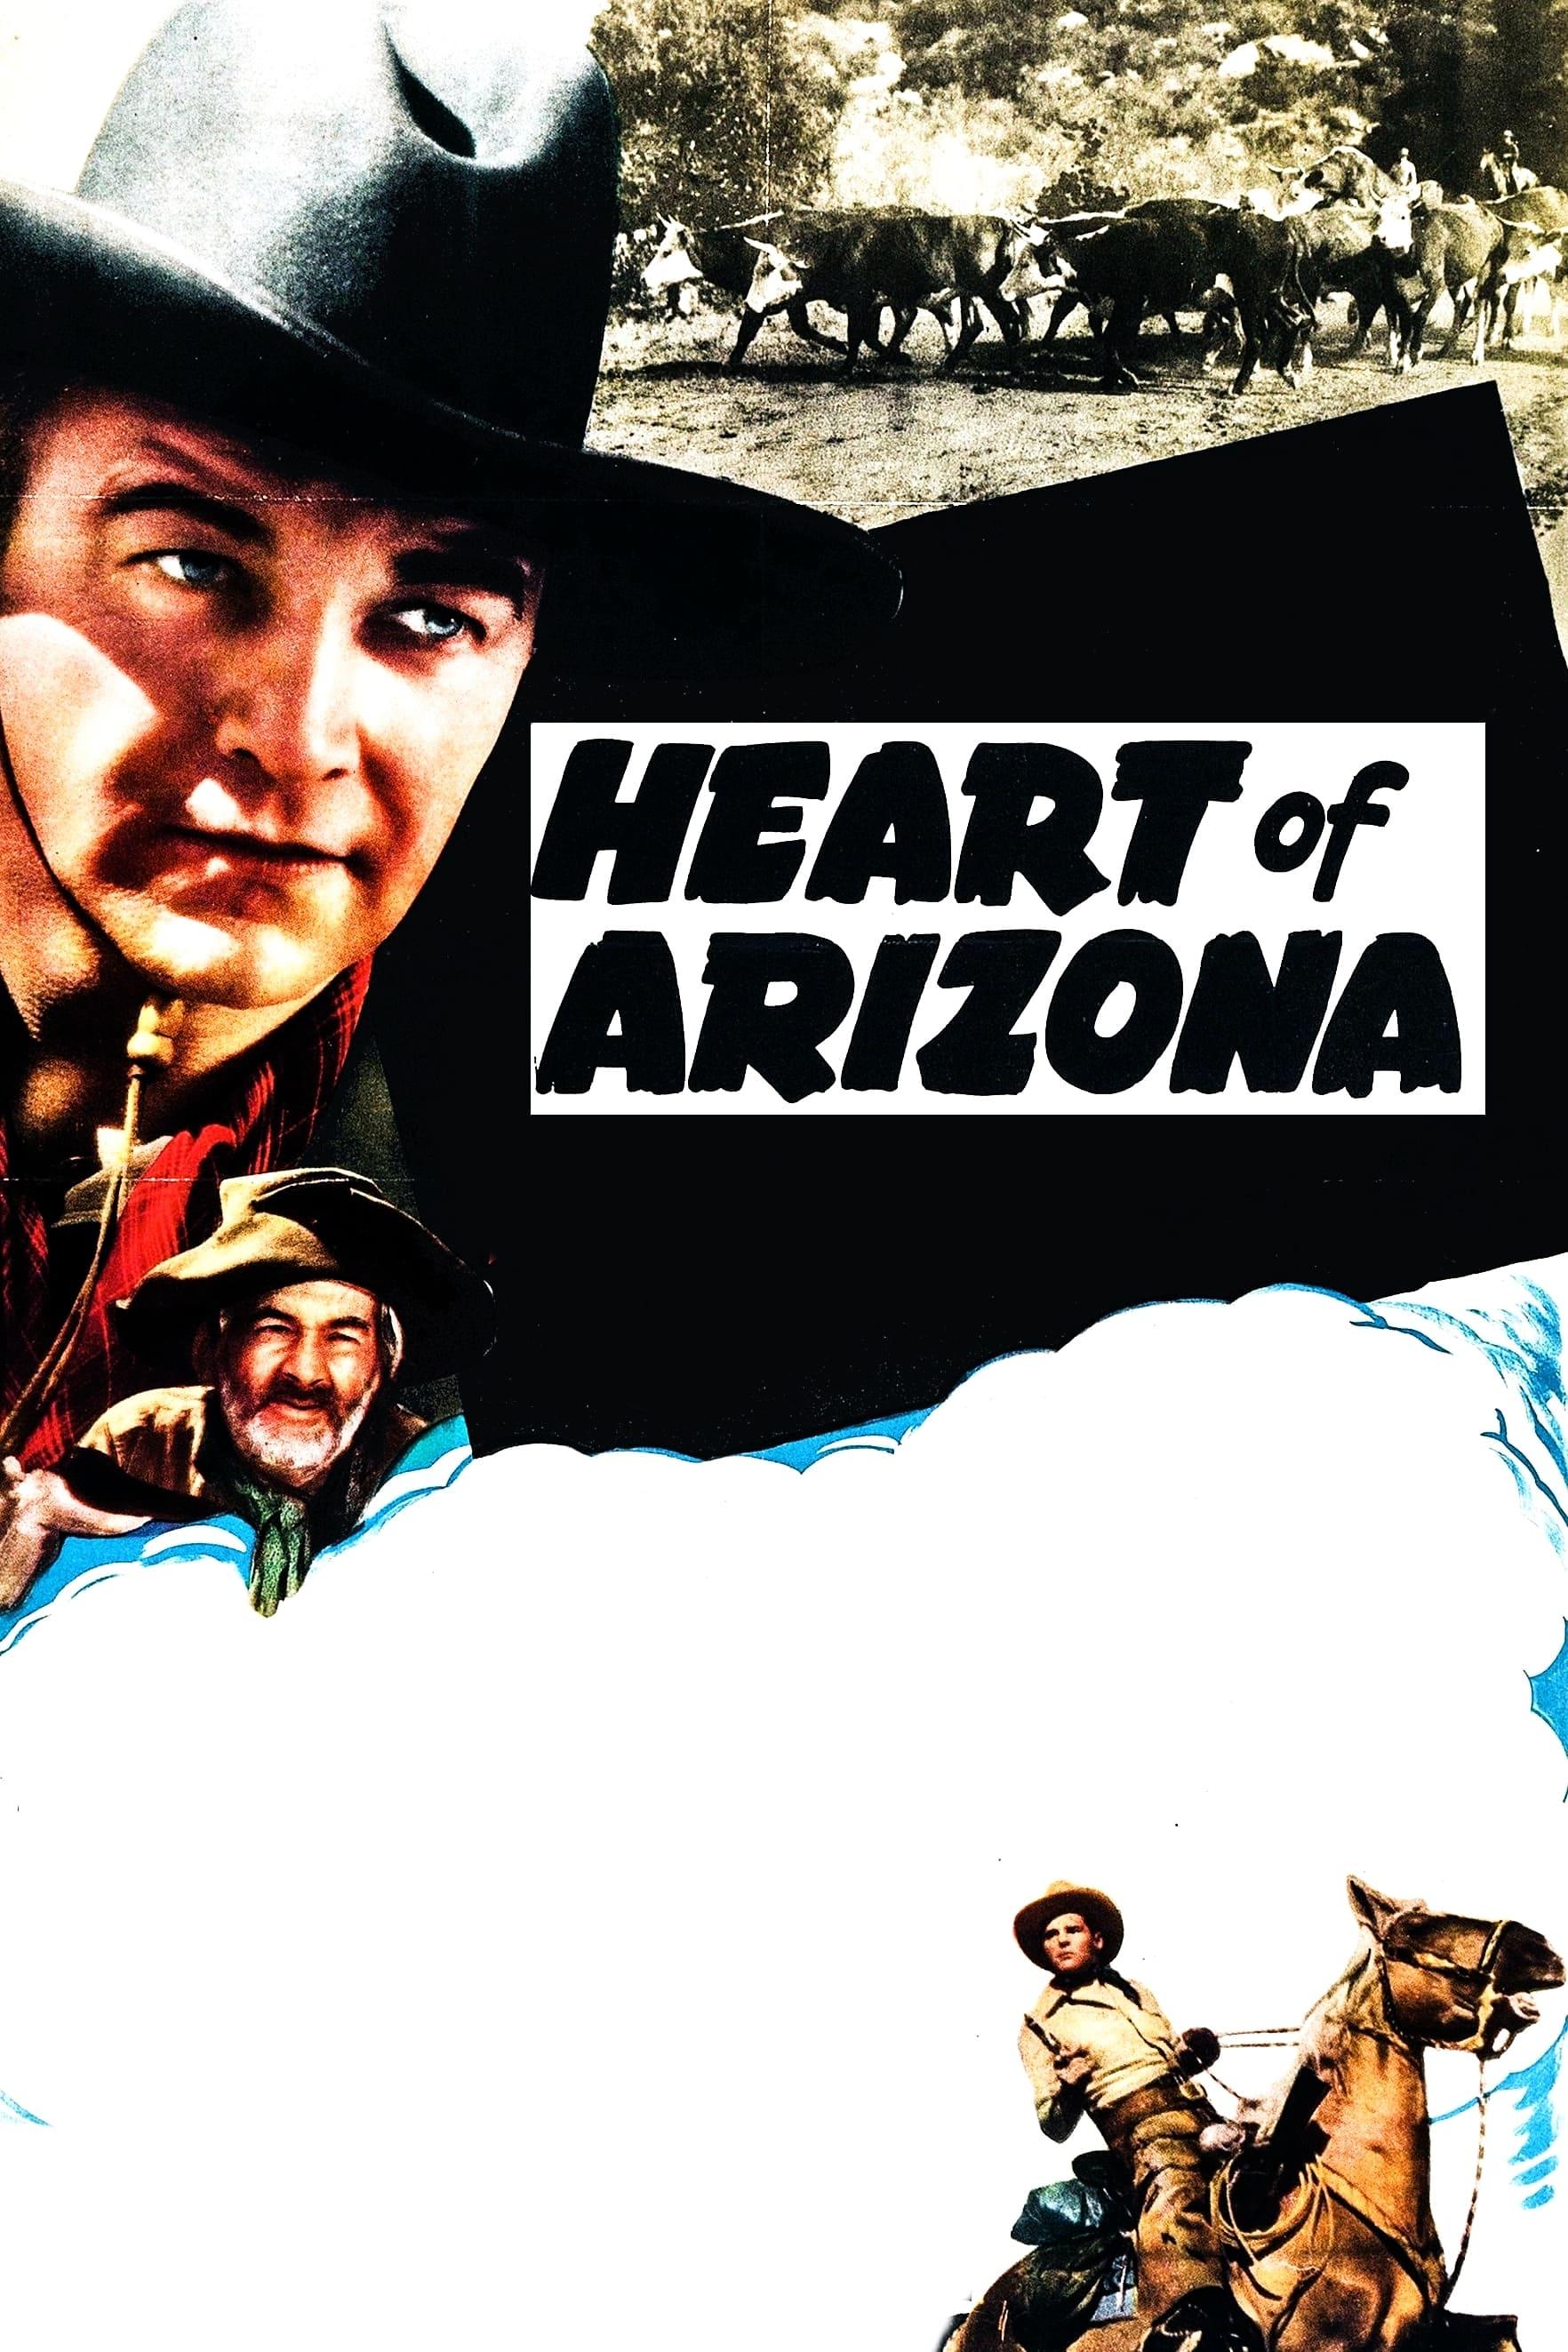 Heart of Arizona poster